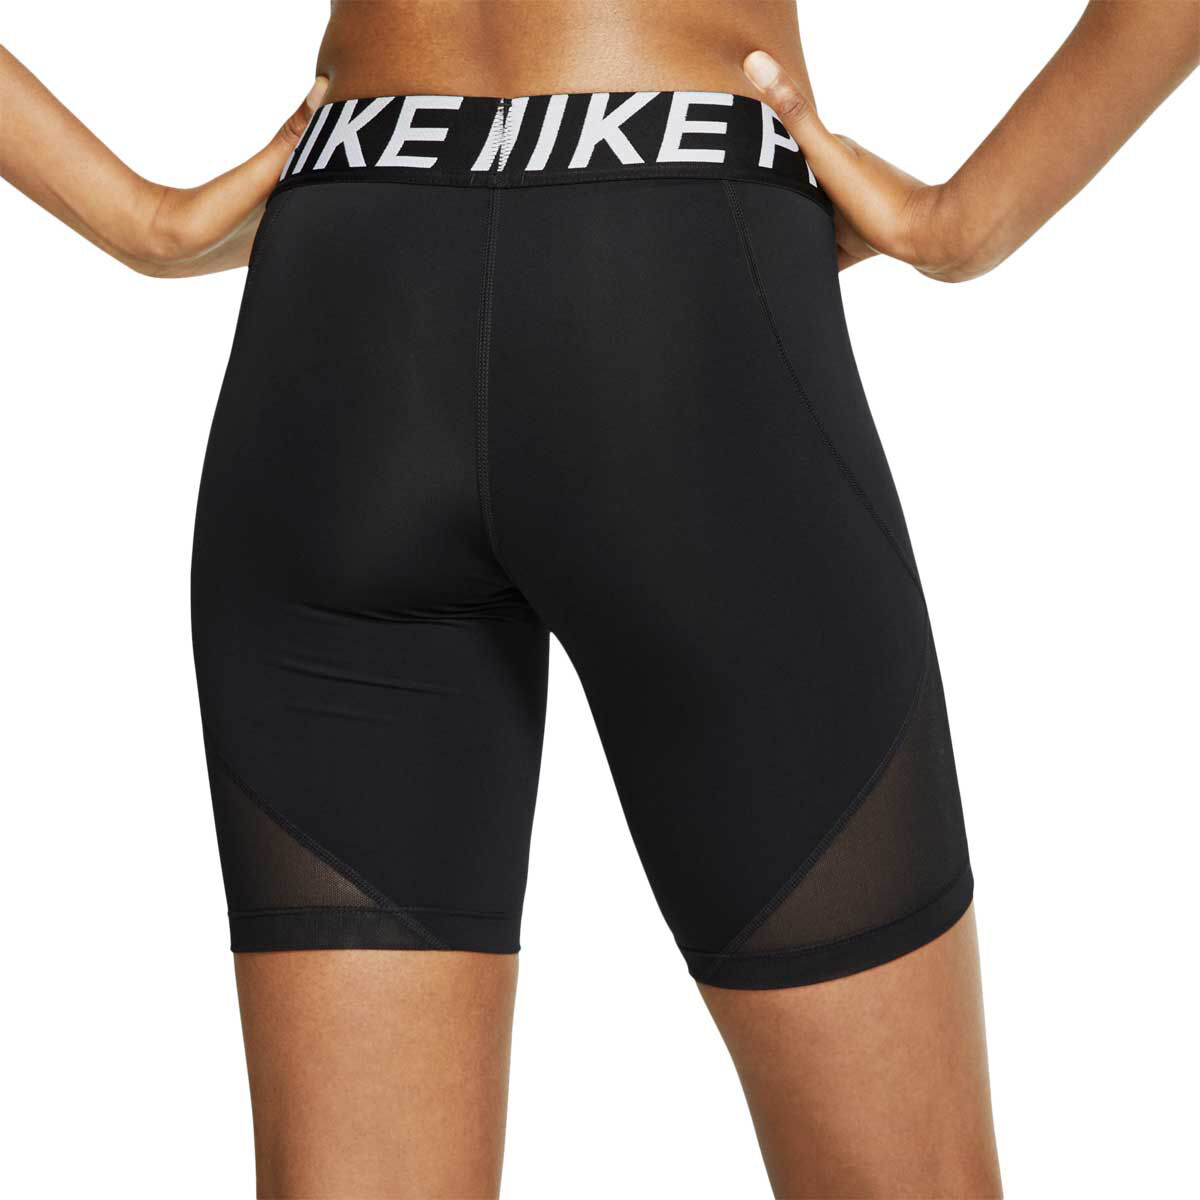 nike mesh biker shorts